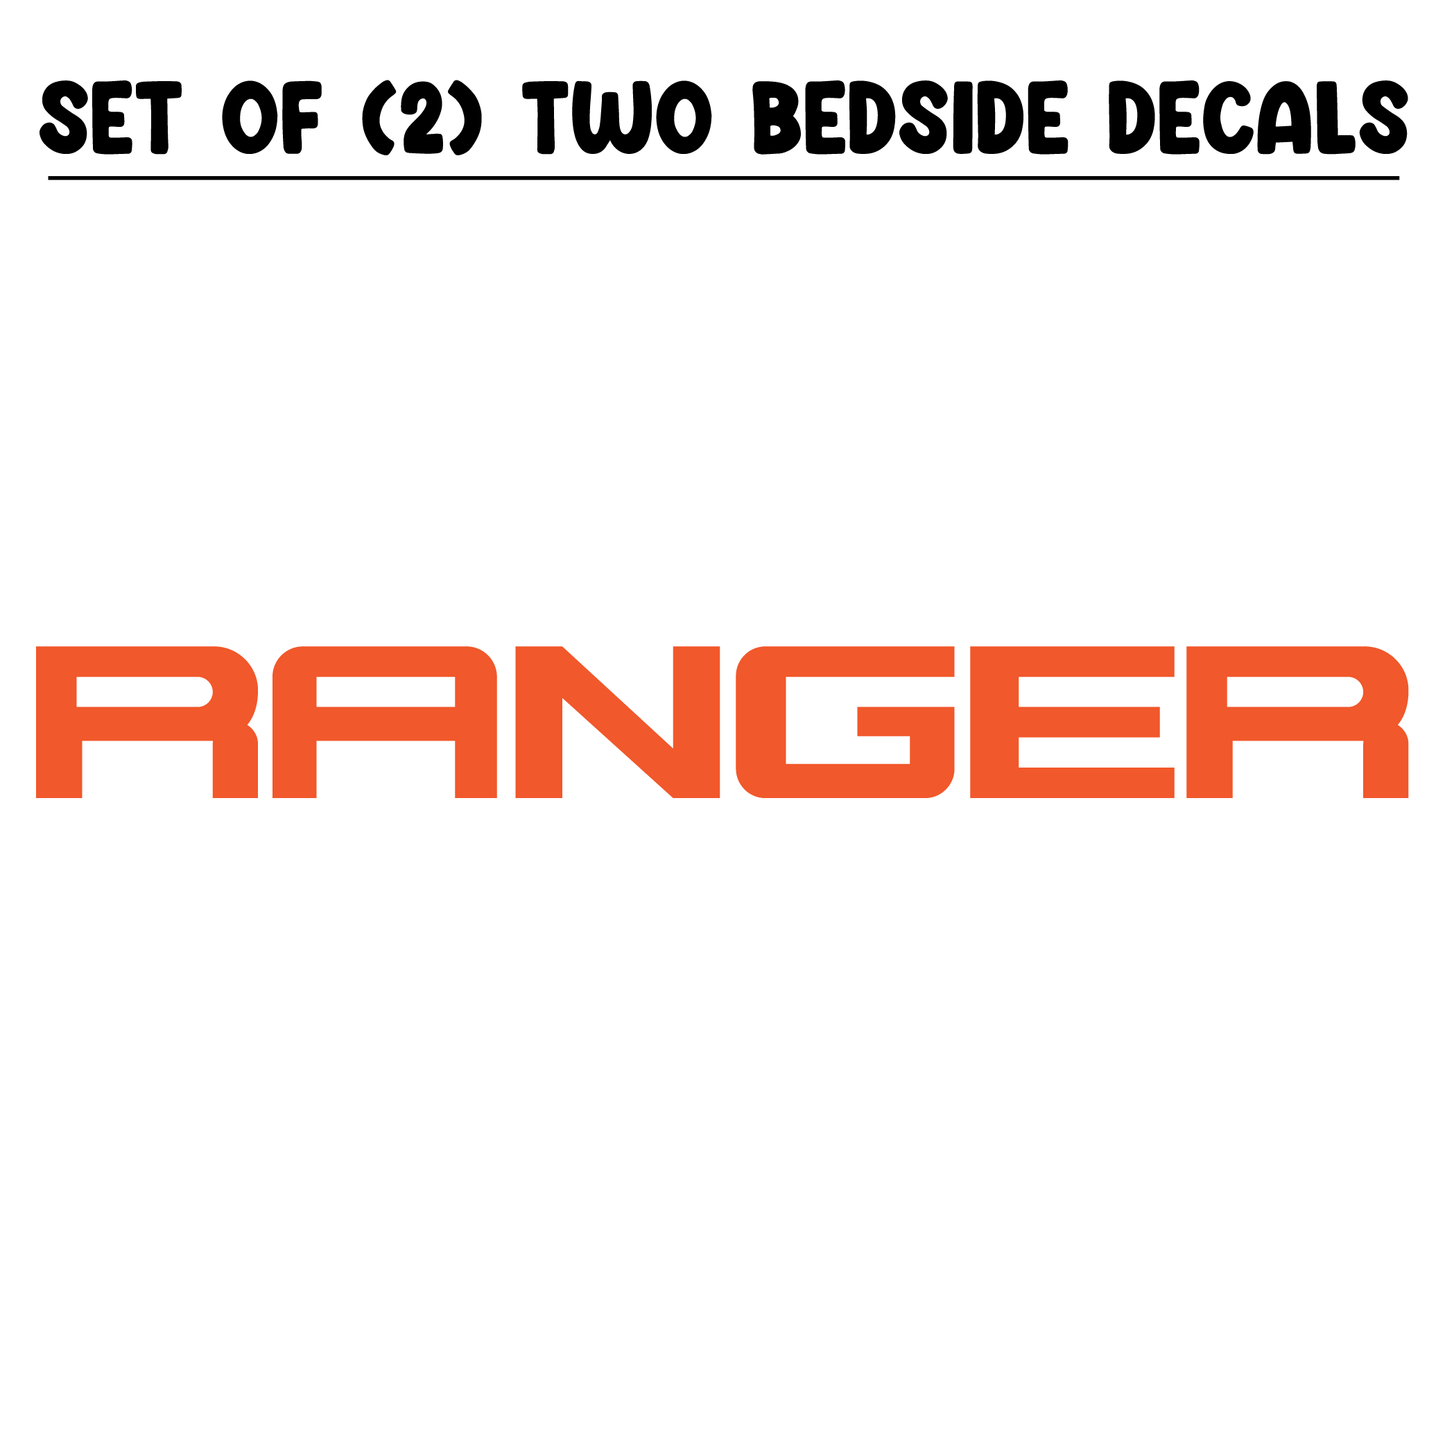 Shop Vinyl Design Ranger Trucks Replacement Bedside Decals #002 Vehicle decal 001 Orange Gloss Shop Vinyl Design decals stickers